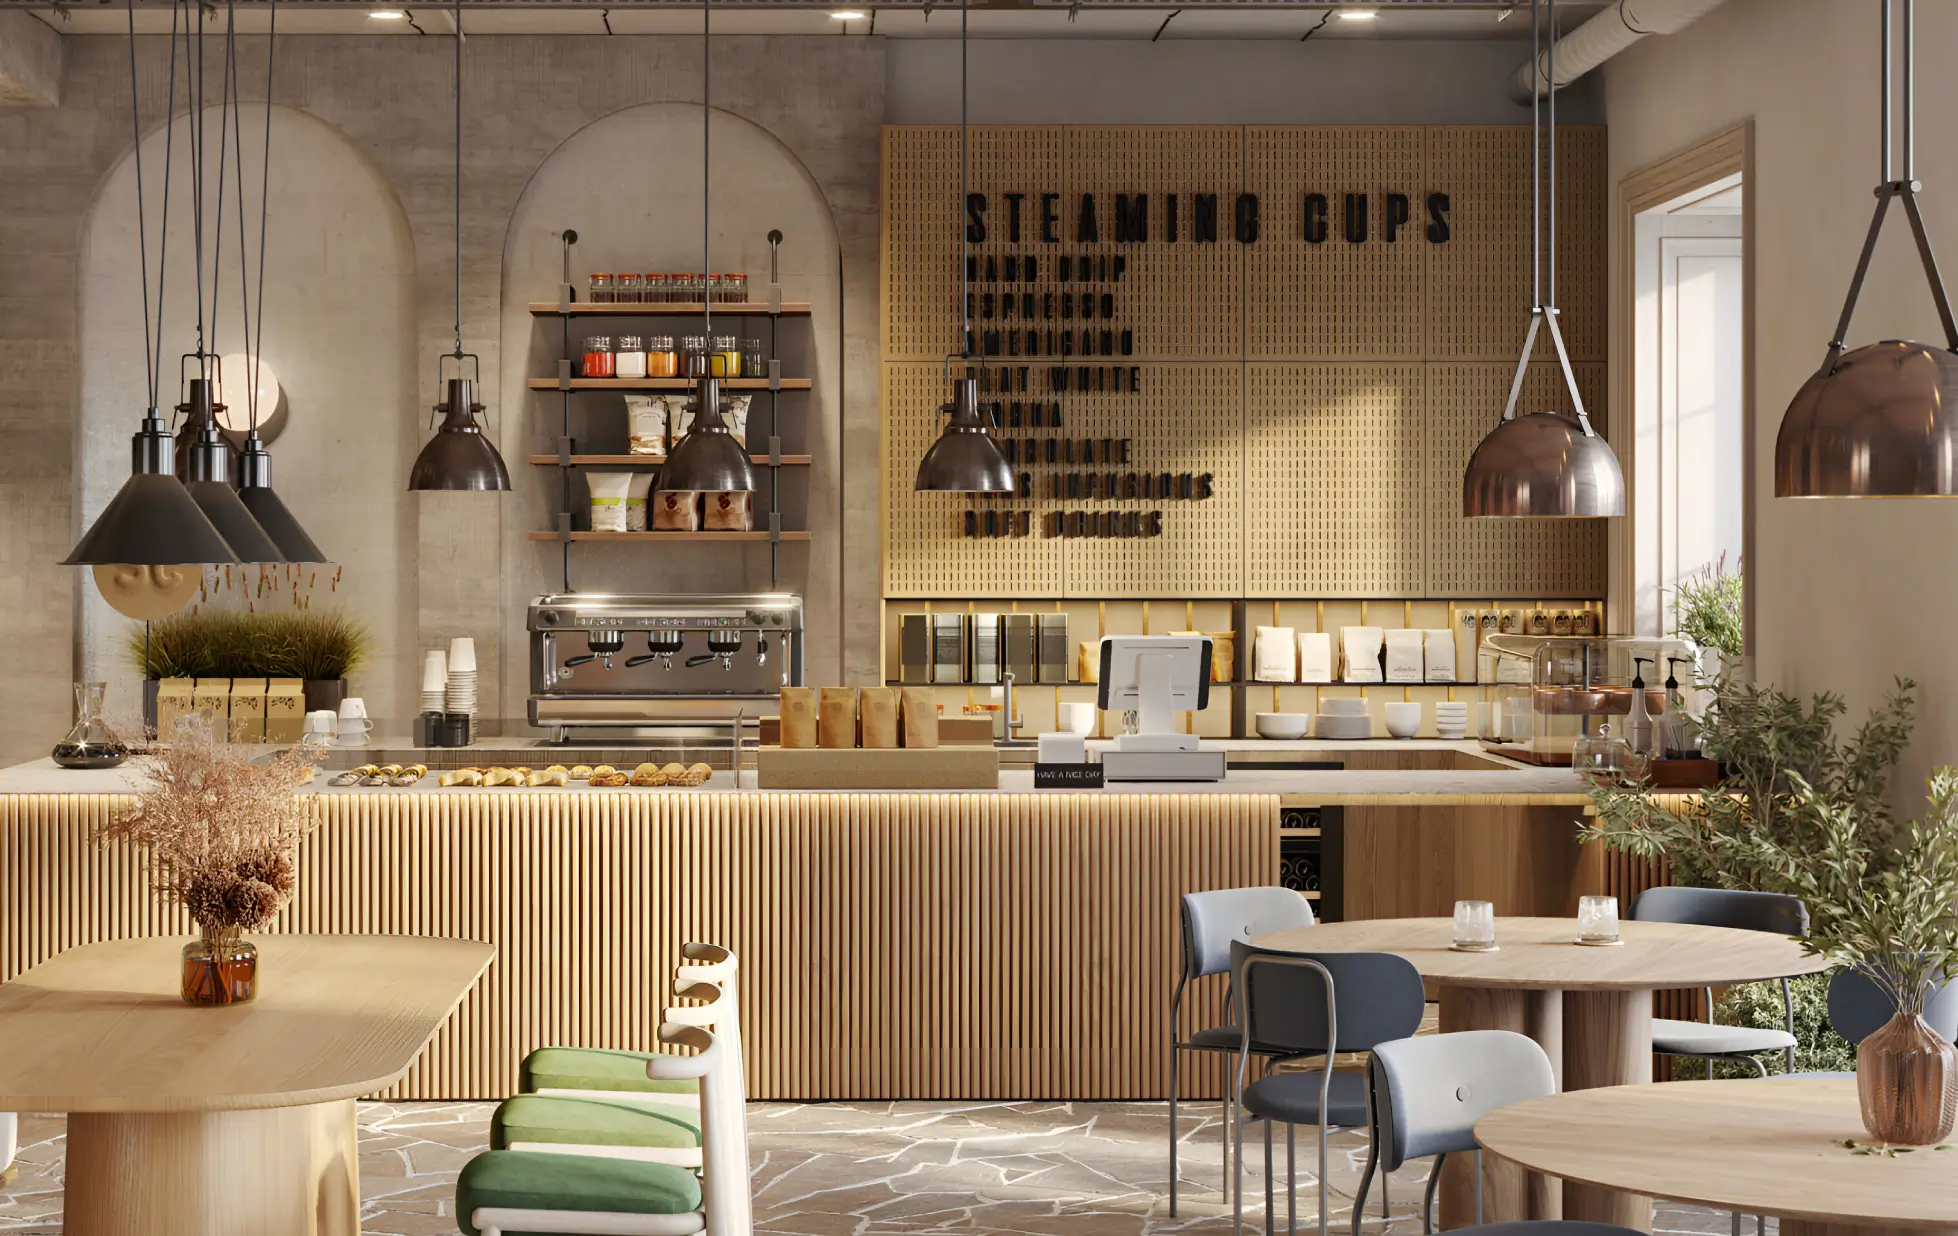 Top 5 Creative Ideas for Small Coffee Shop Interior Design - InOut Interiors